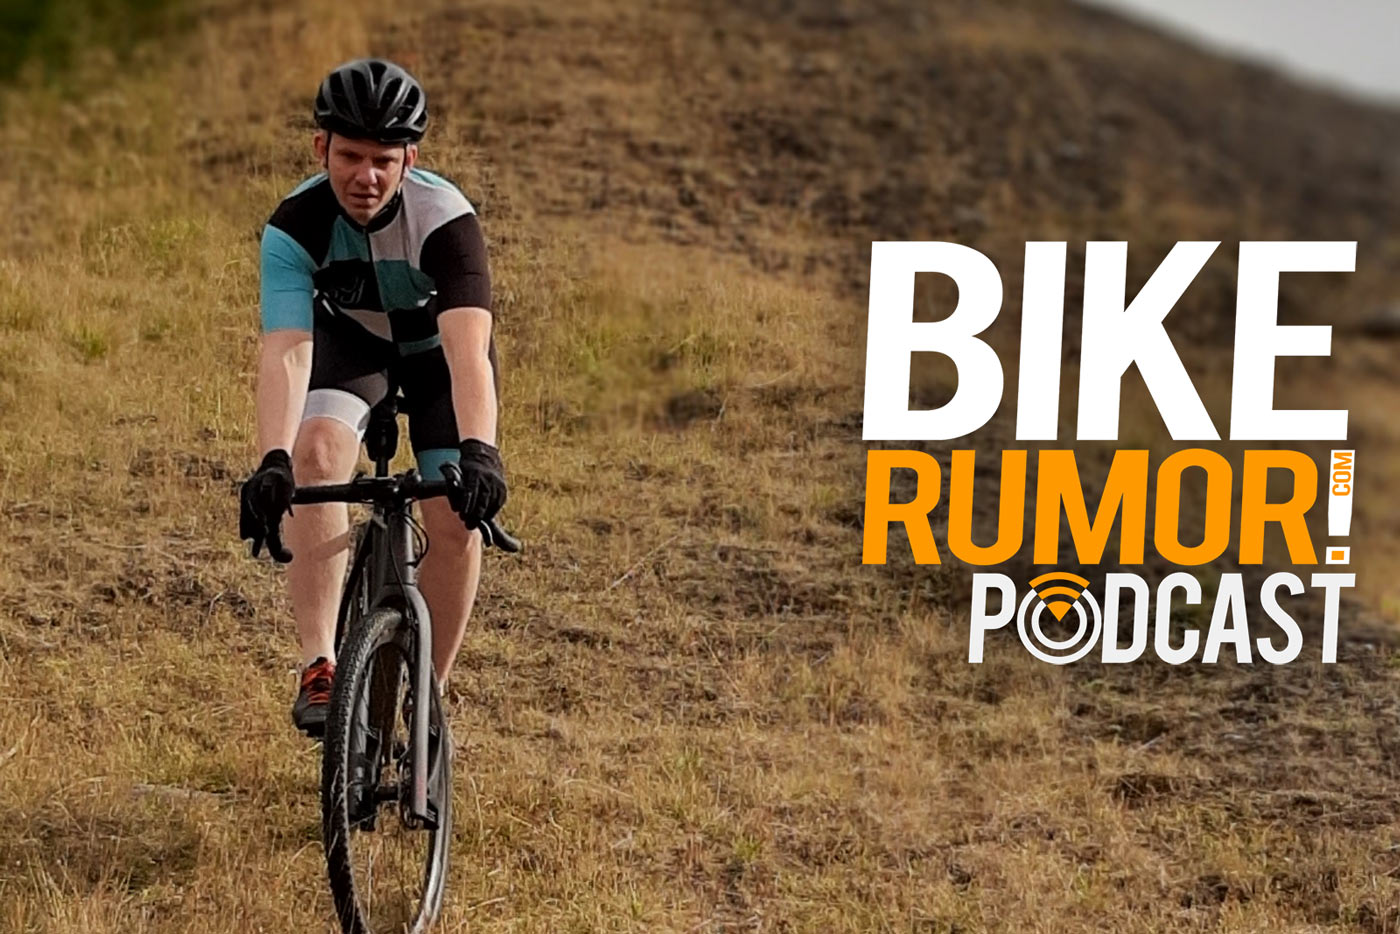 bikerumor podcast interview with lauf cycles founder benedikt skulason